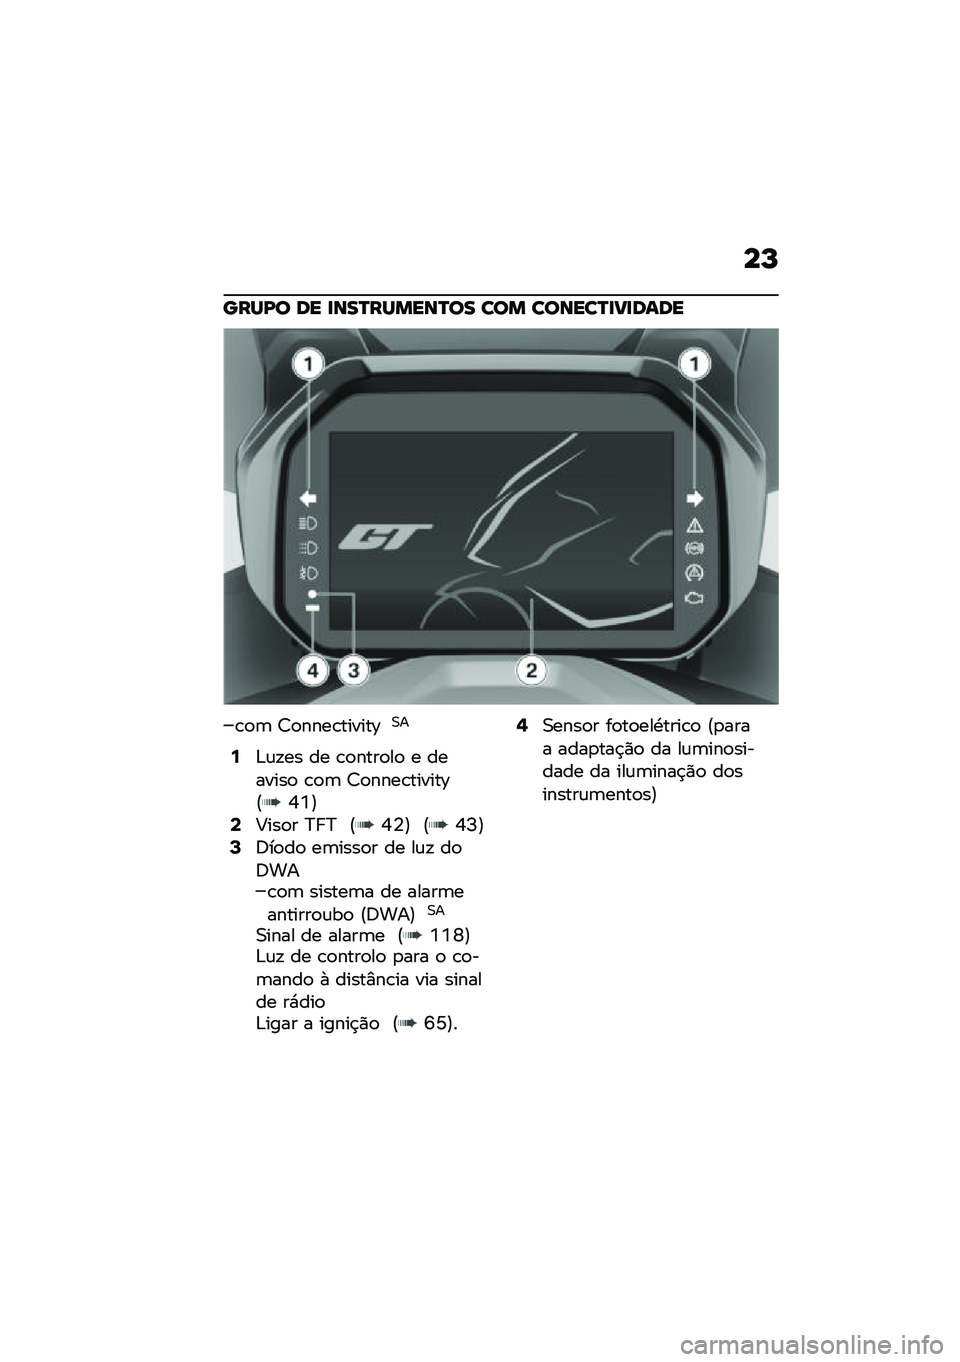 BMW MOTORRAD C 400 GT 2020  Manual do condutor (in Portuguese) ��L
����A� �� �
���P������P�� ��� ������P�
��
����
�\b�
�	 �<�
����\b������D�0�
�7�&�\f�!�� �� �\b�
����
��
 � �������
 �\b�
�	 �<�
����\b���